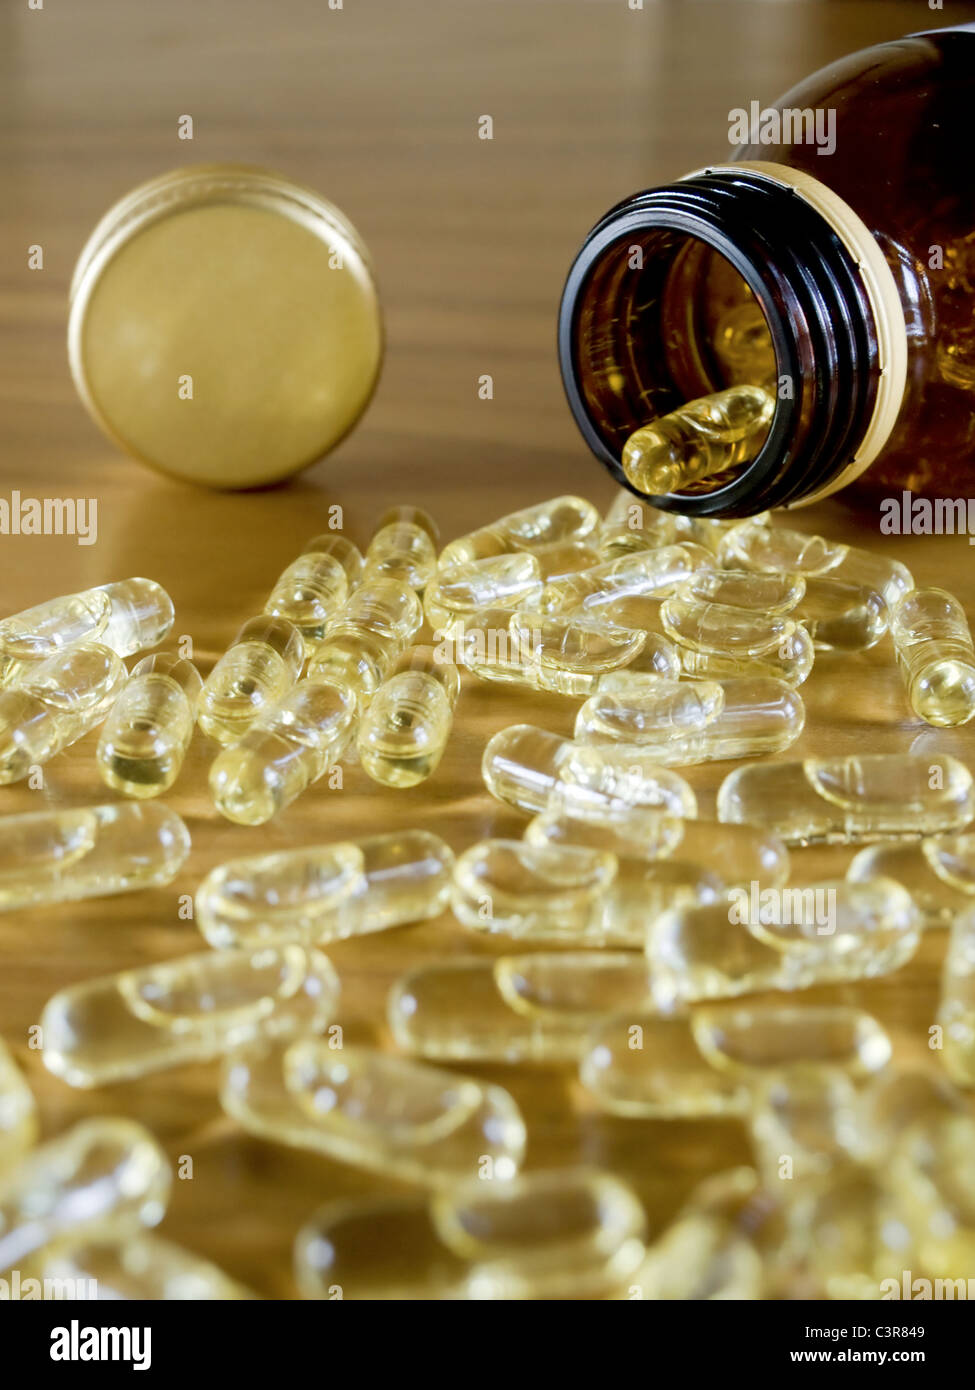 omega-3 pills  on wood table Stock Photo